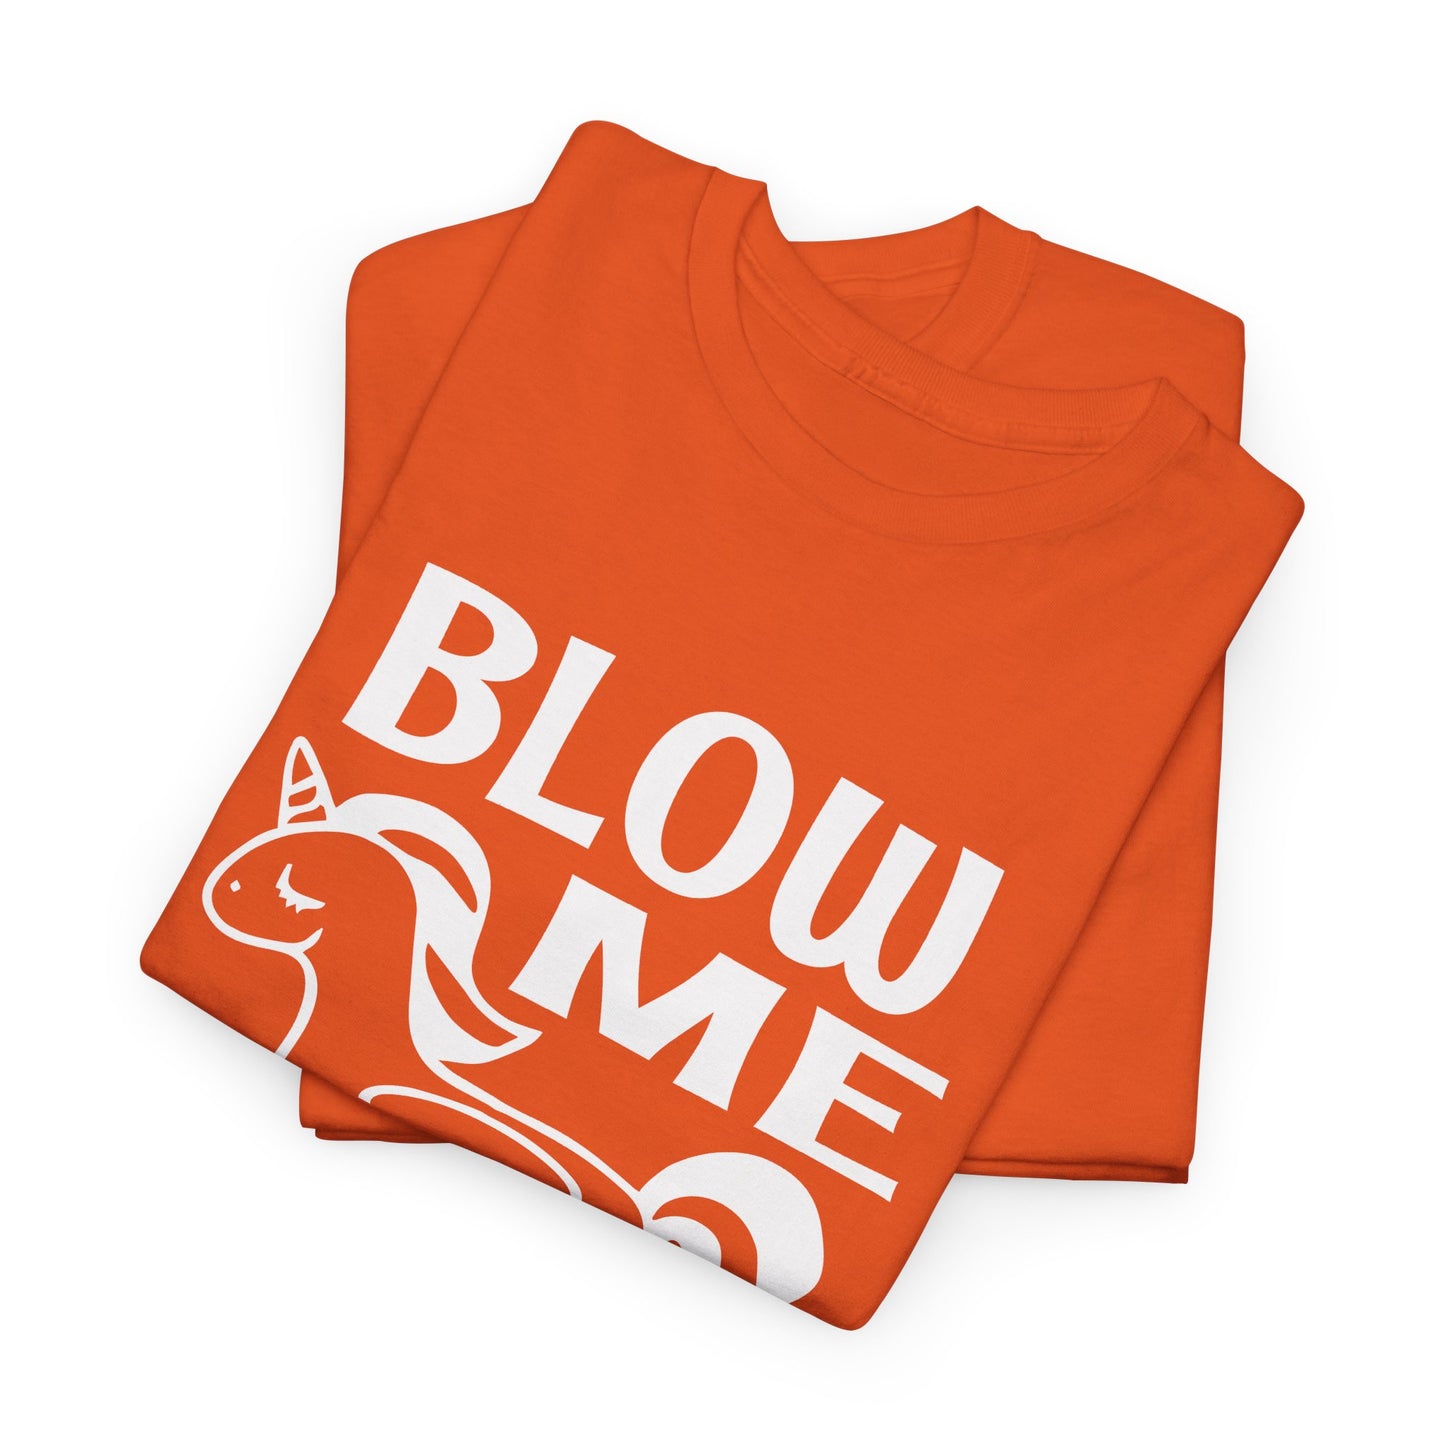 Blow Me Like An Inflatable Unicorn (2) - Gildan 5000 Unisex T-shirt